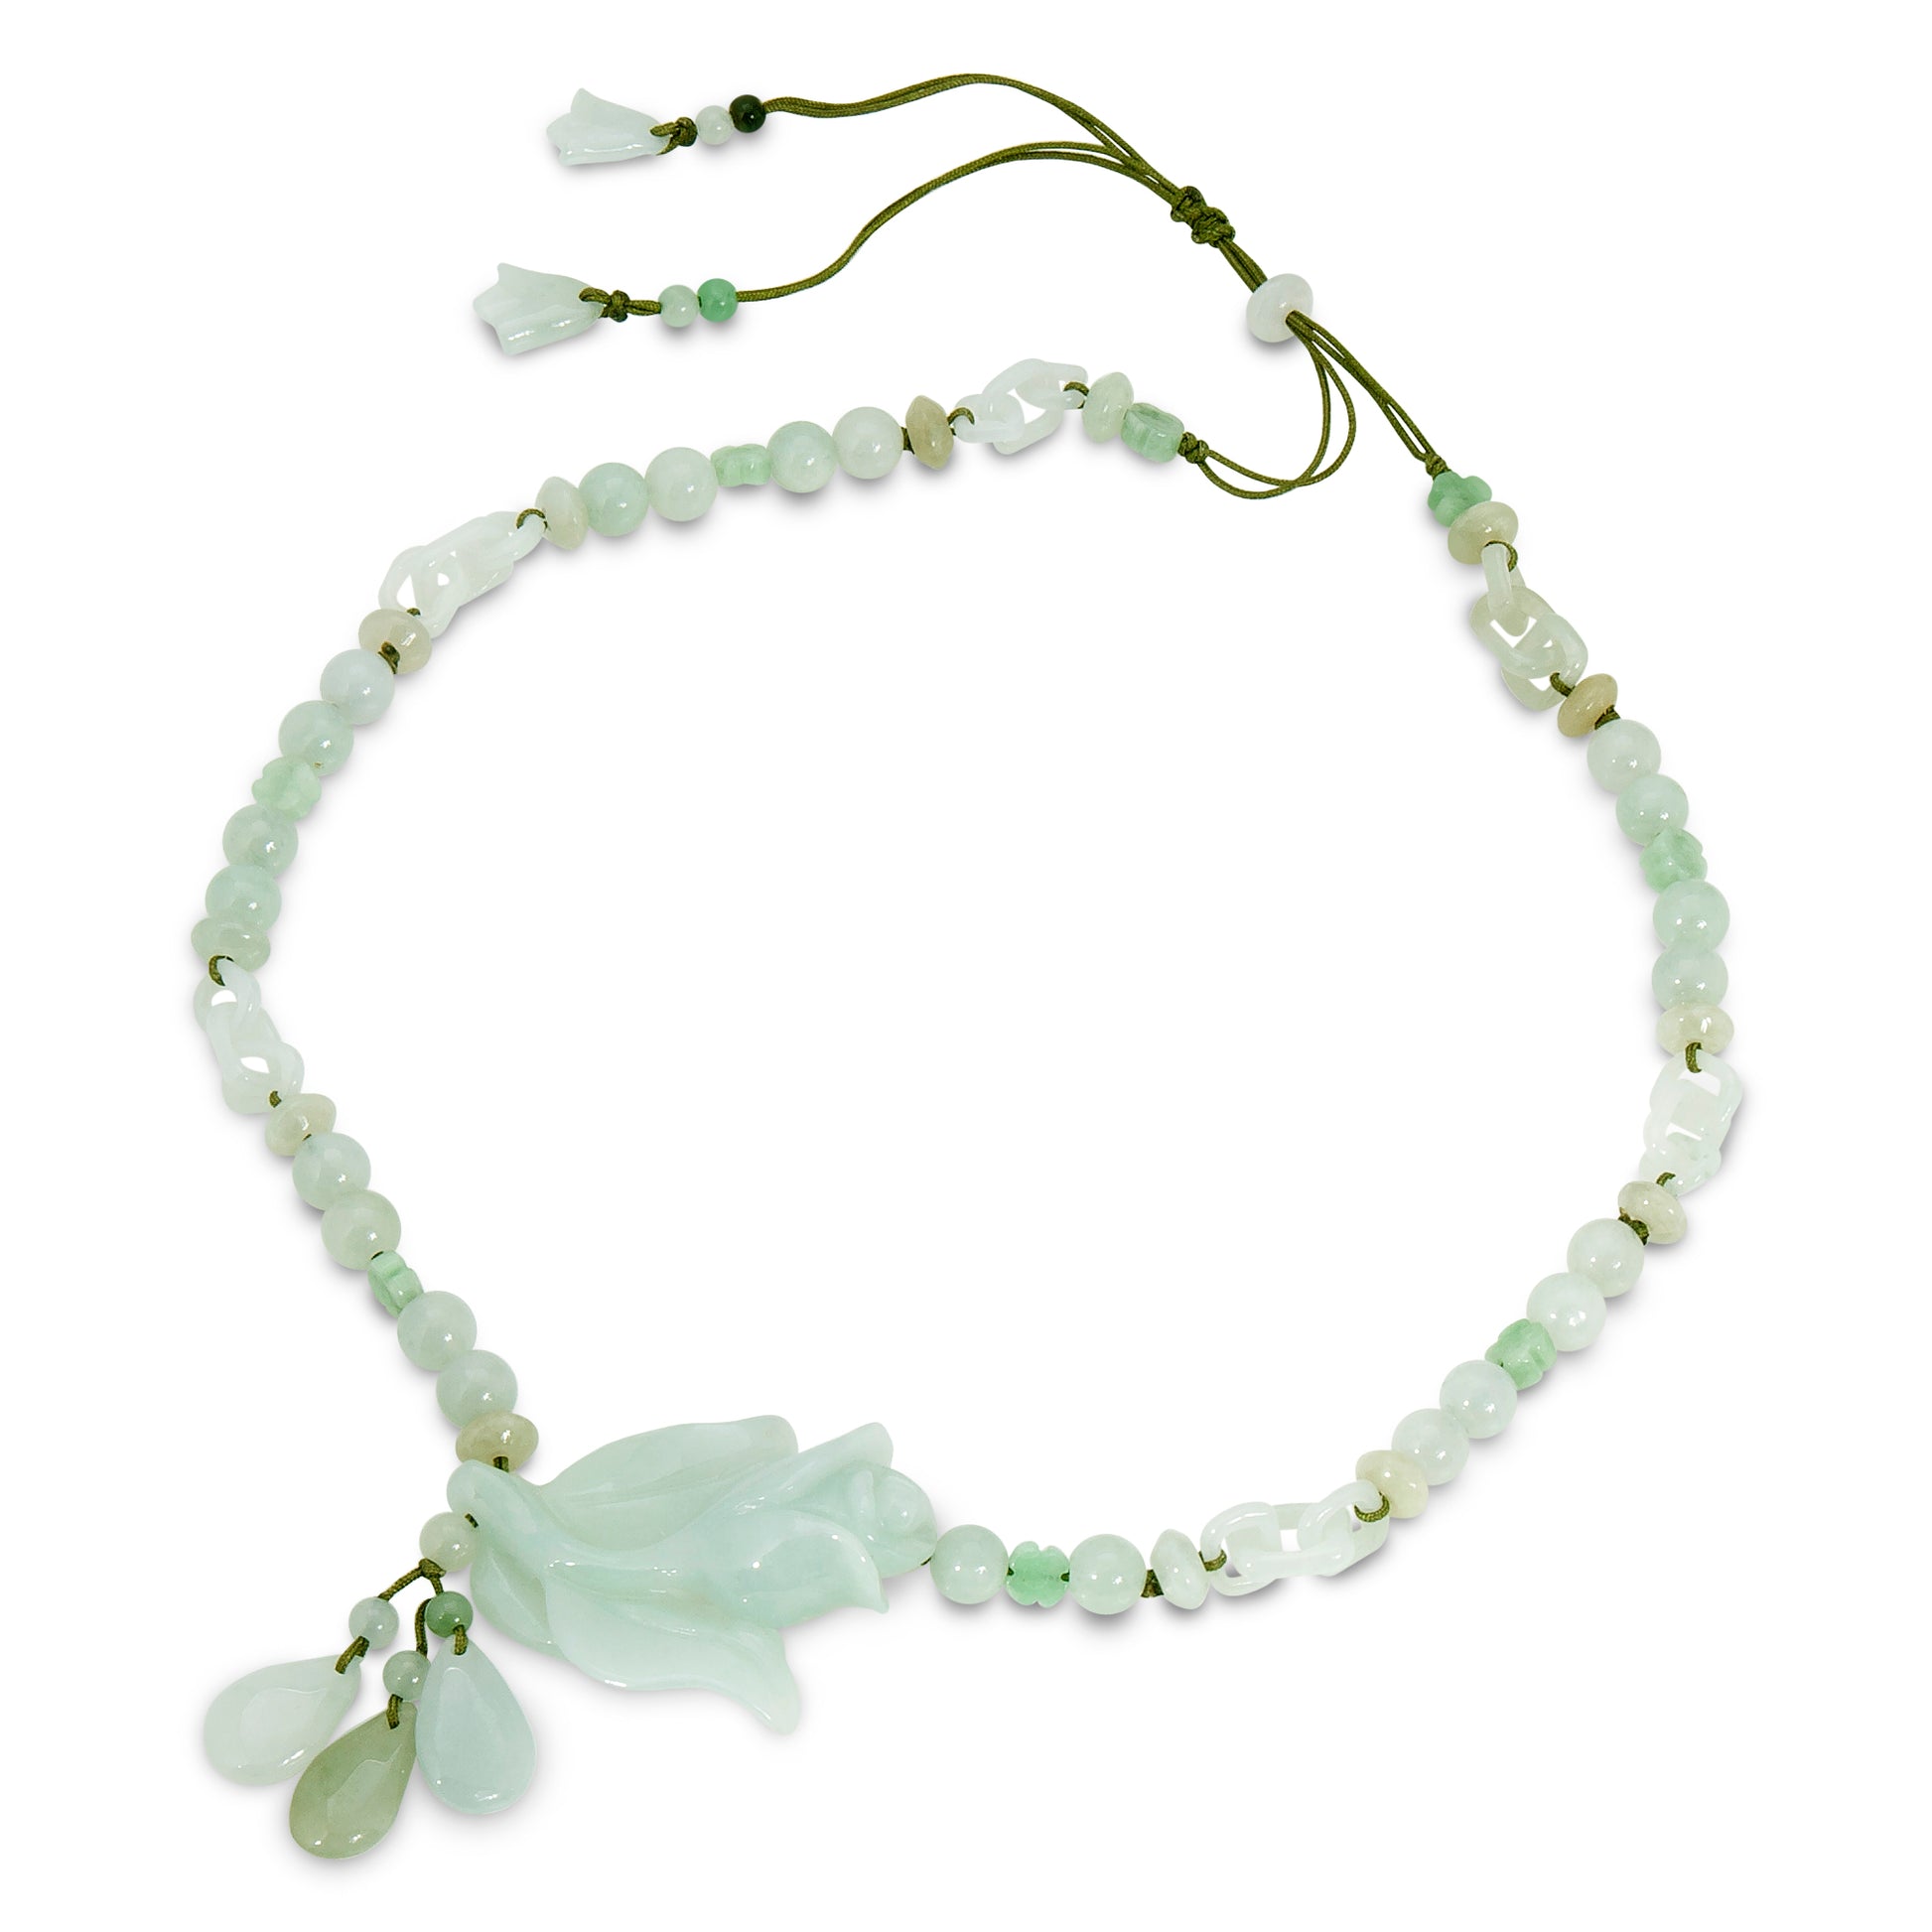 Let Her Shine with Spectacular Rose Flower Jade Necklace